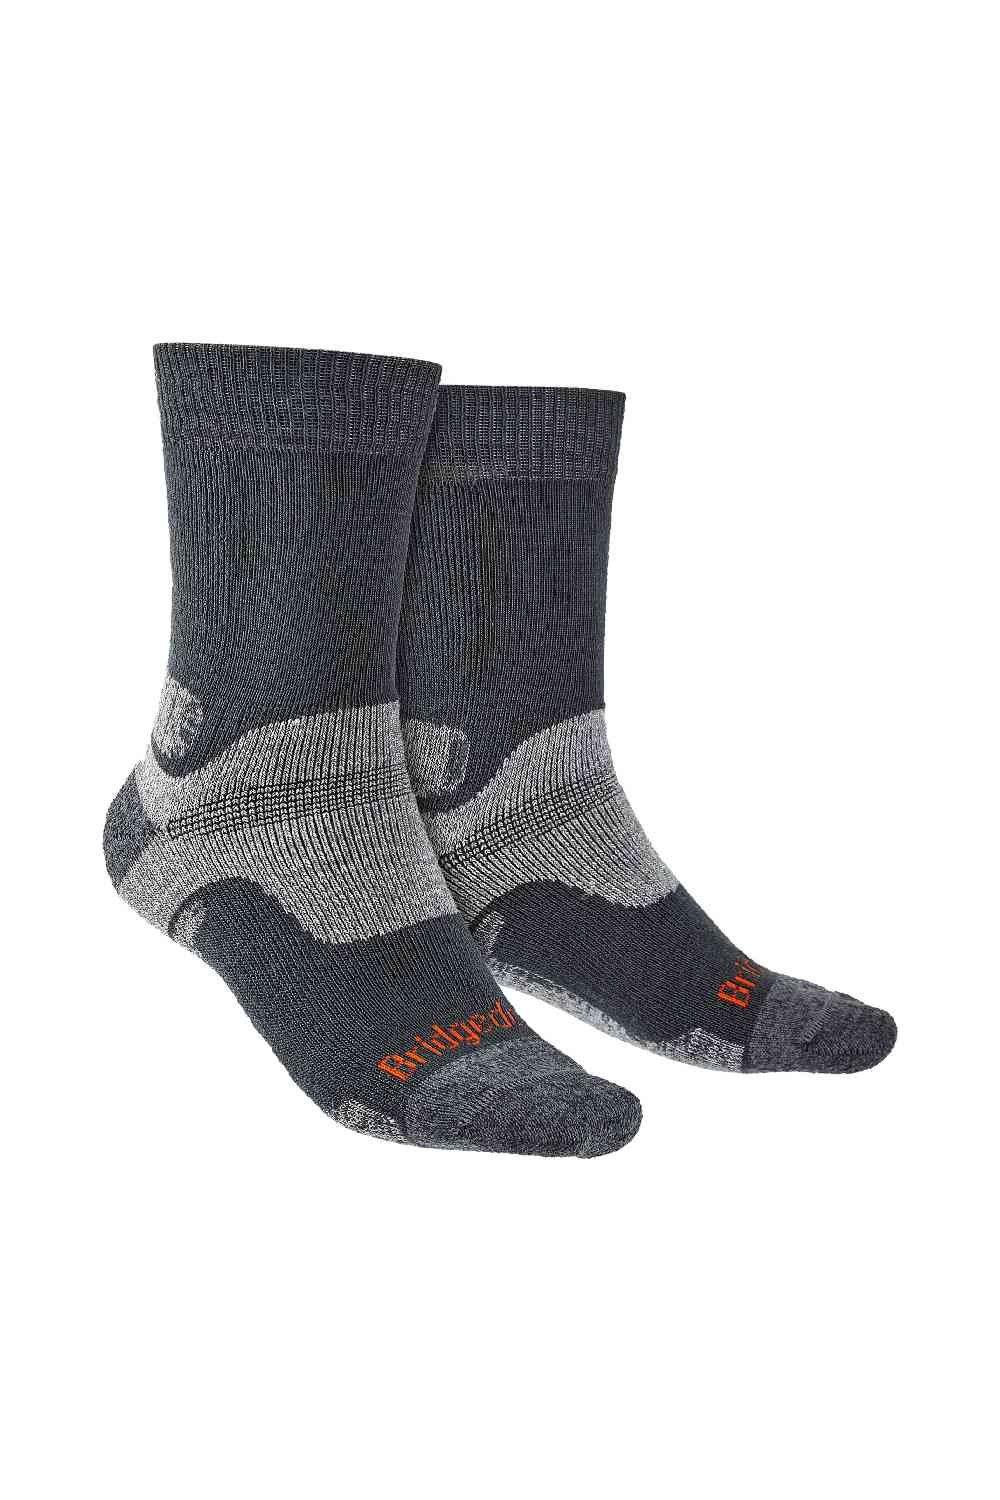 Hiking Midweight Merino Wool Performance Boot Socks